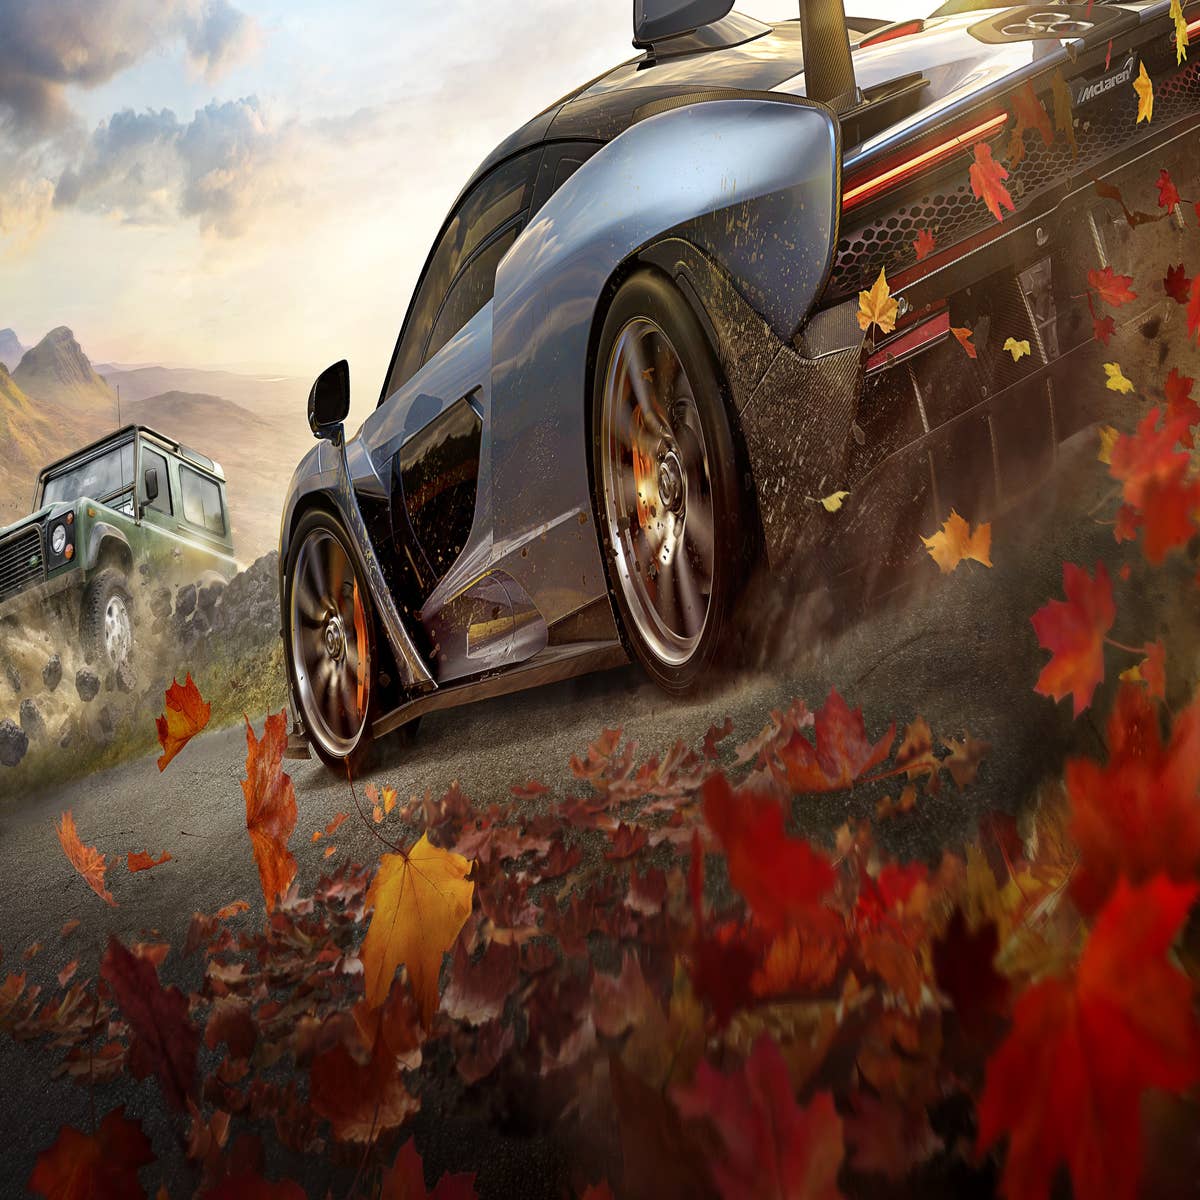 Forza Horizon 4 - Steam Trailer 